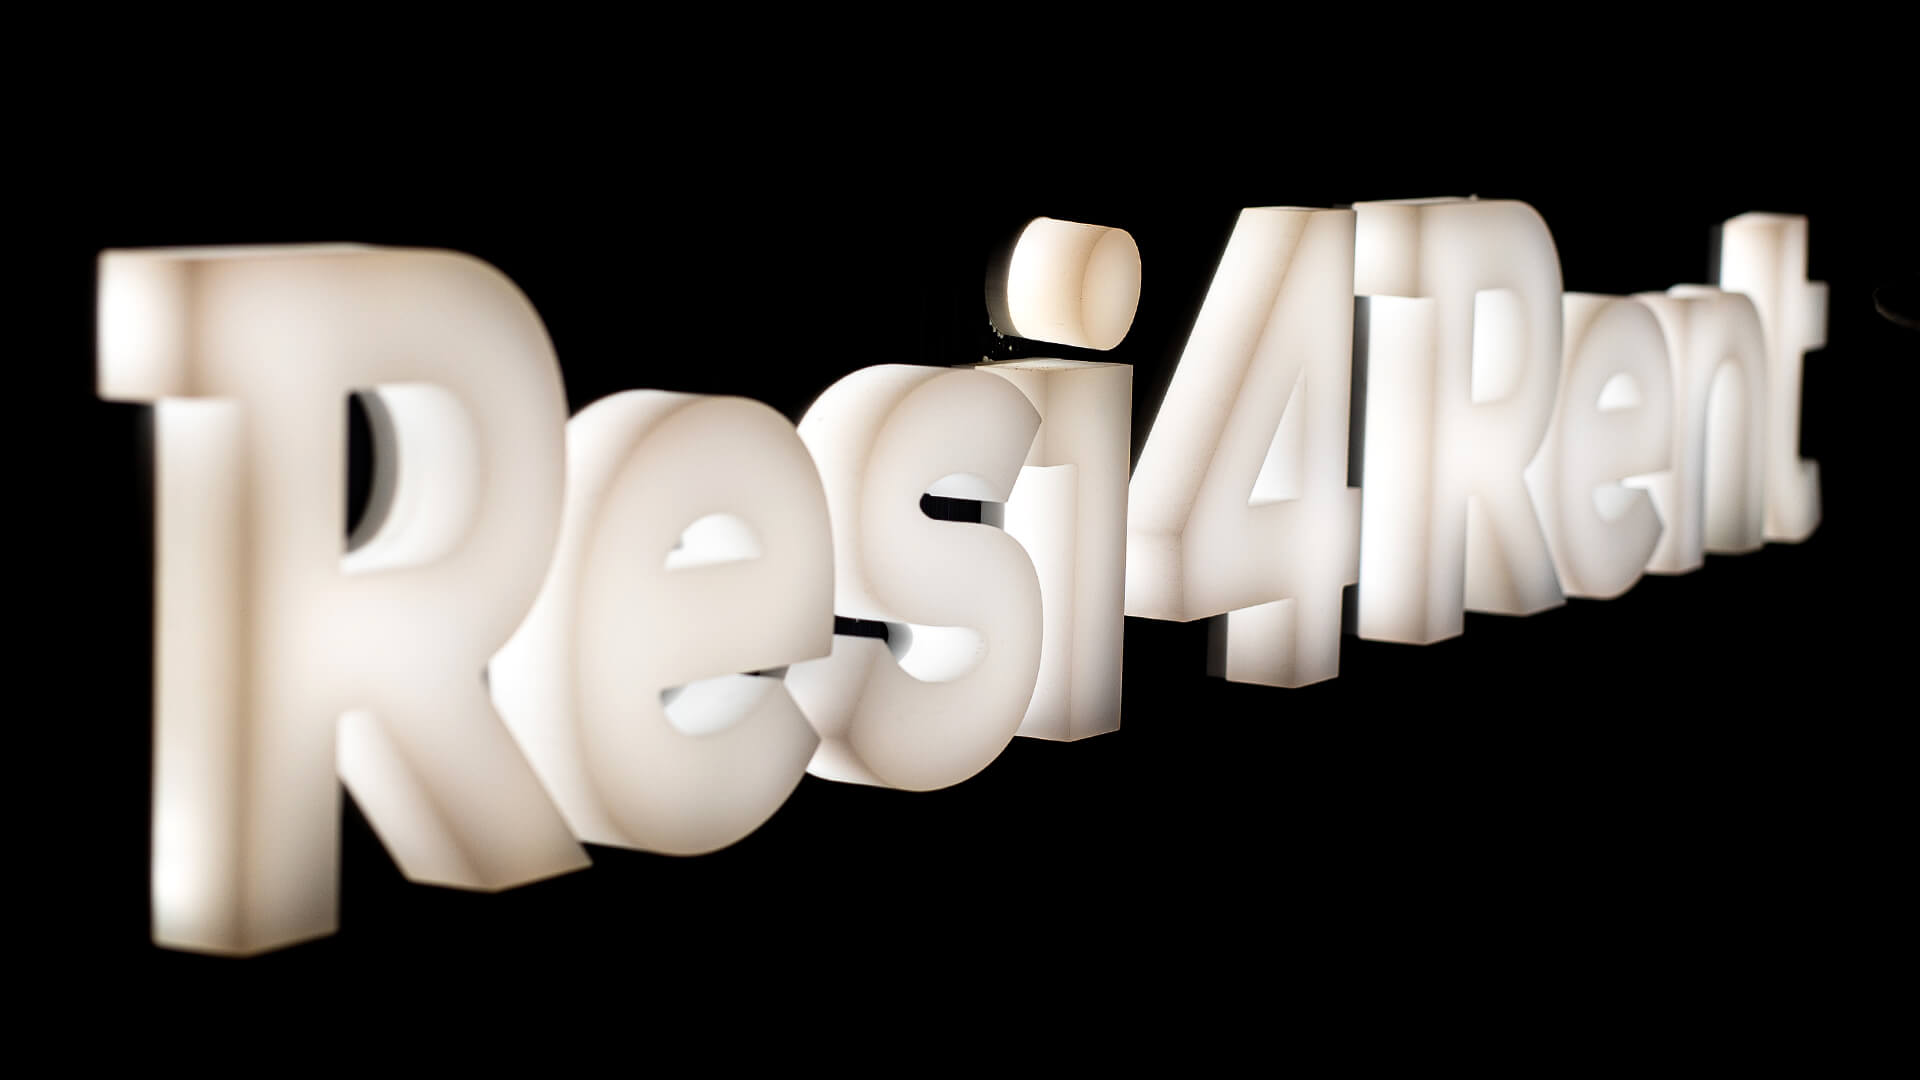 Resi4Rent - LED-Buchstaben mit Frontbeleuchtung an der Rezeption